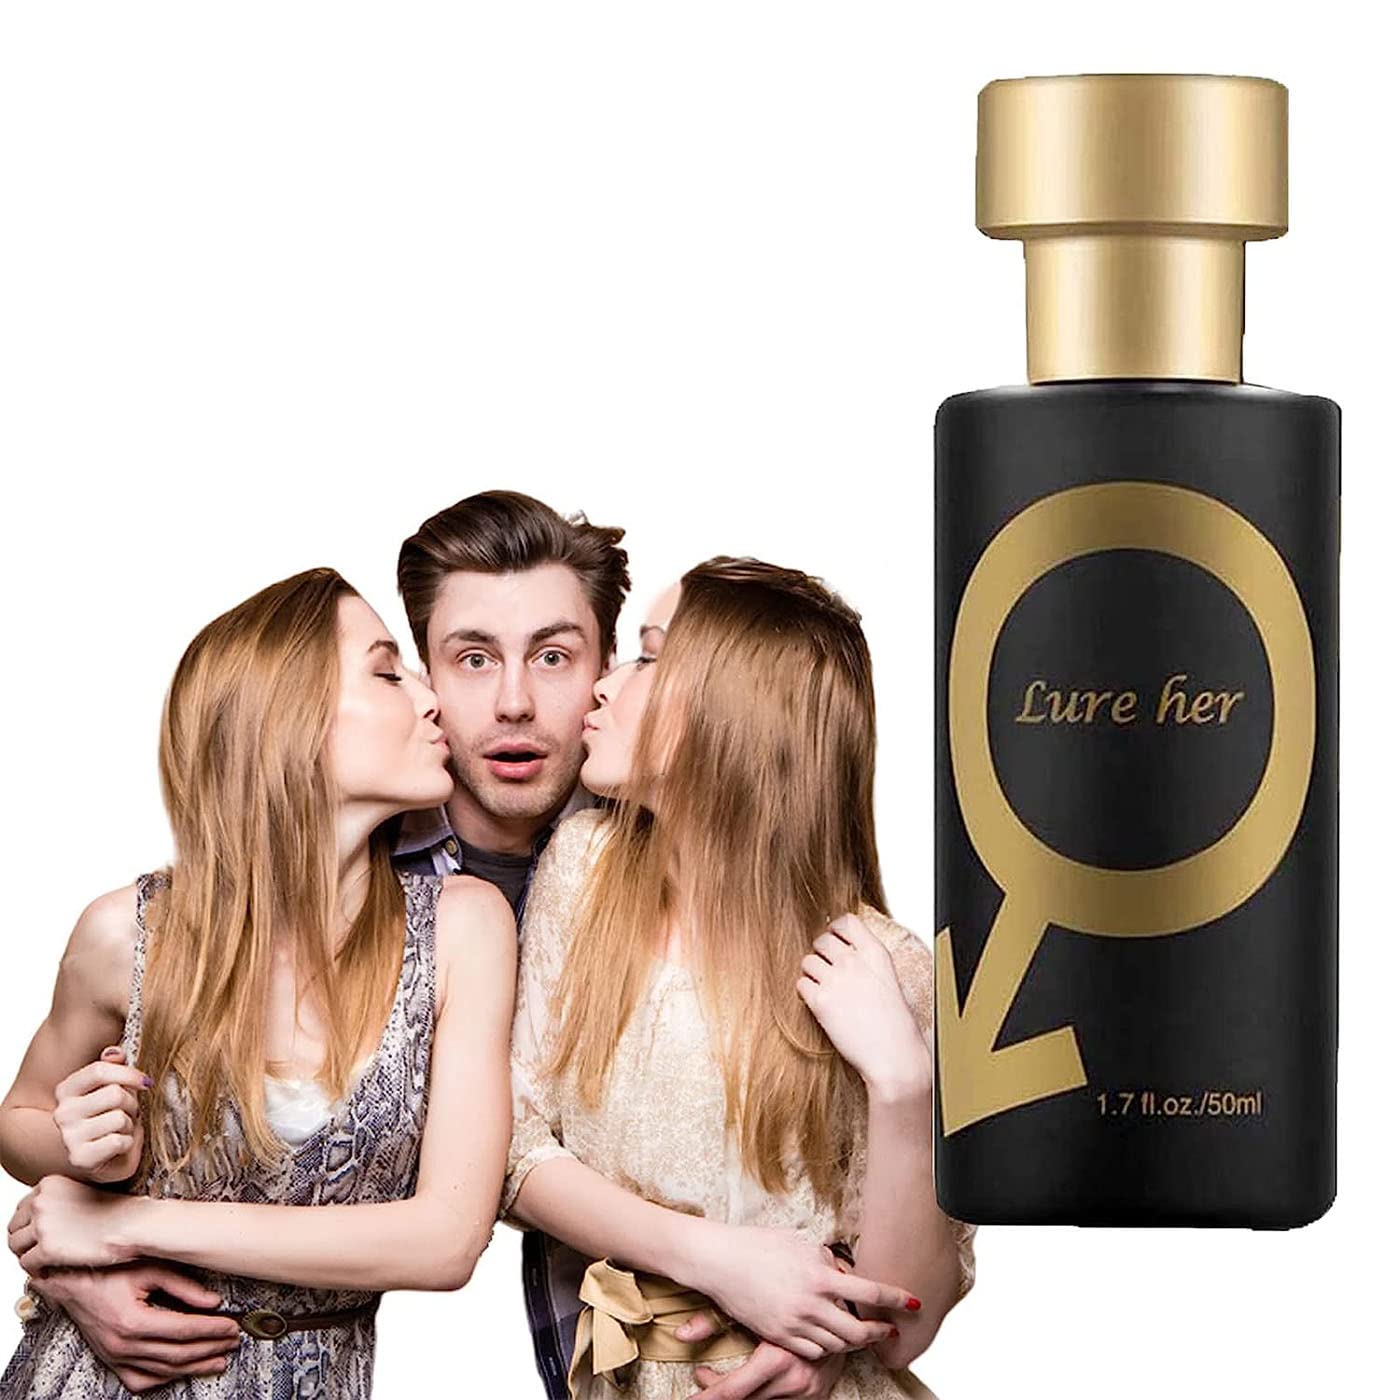 Lashvio Perfume For Men, Lure Her Perfume For Men, Pheromone